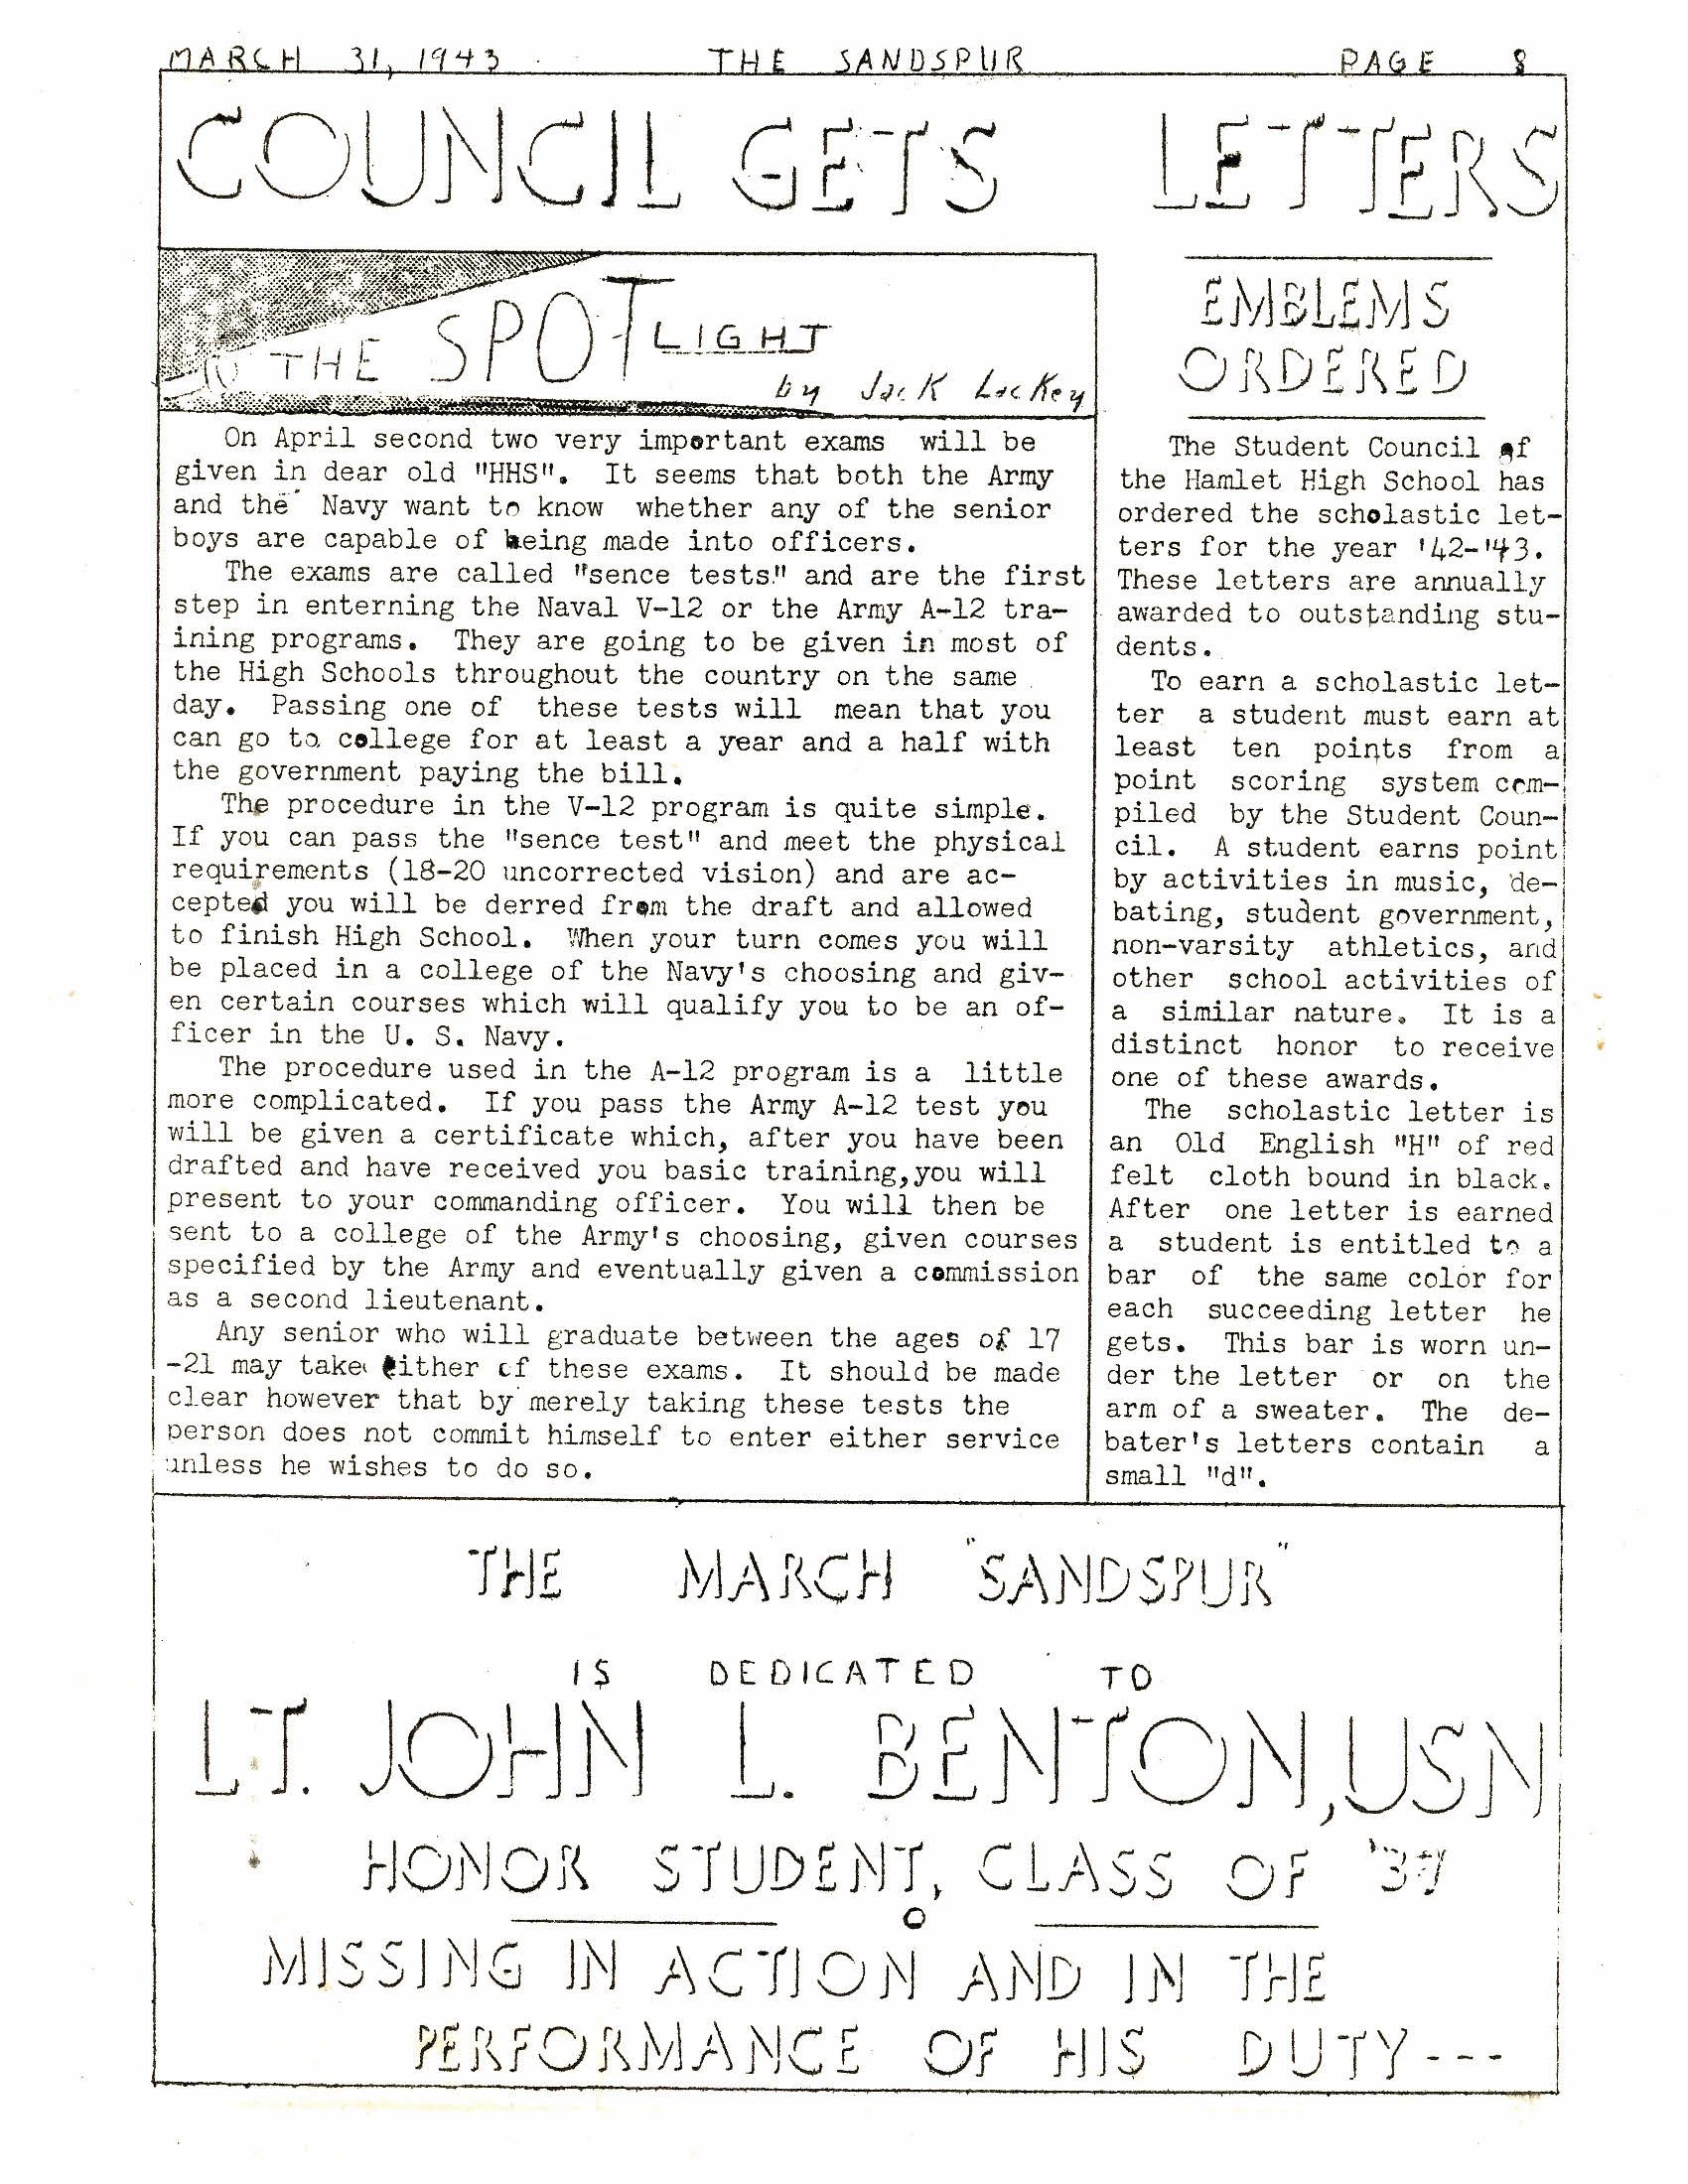 Sandspur March 31, 1943 (10).jpg